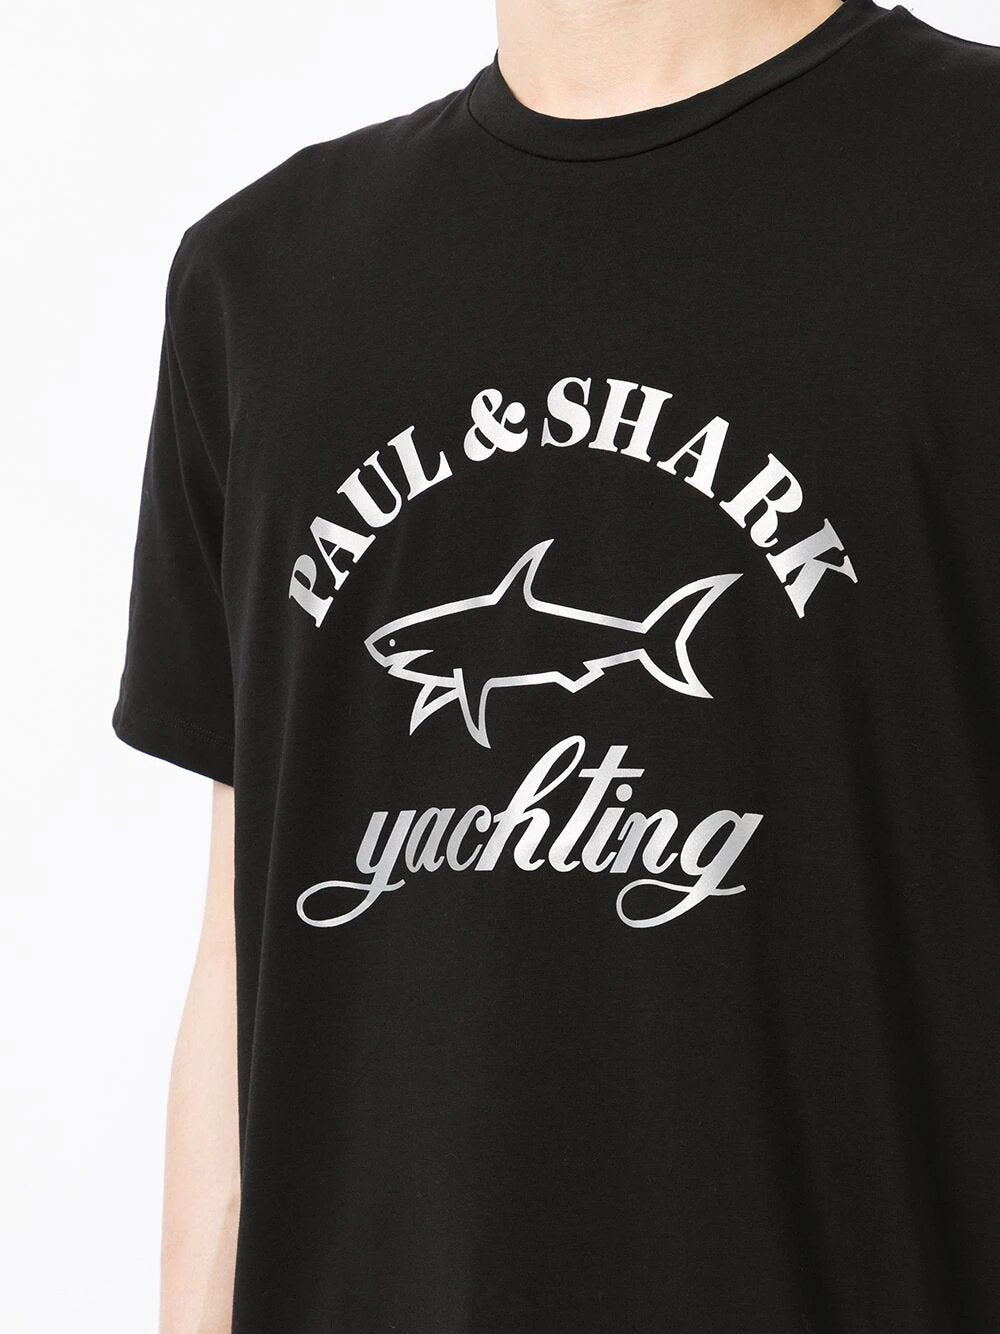 PAUL & SHARK YACHTING BLACK T-SHIRT –